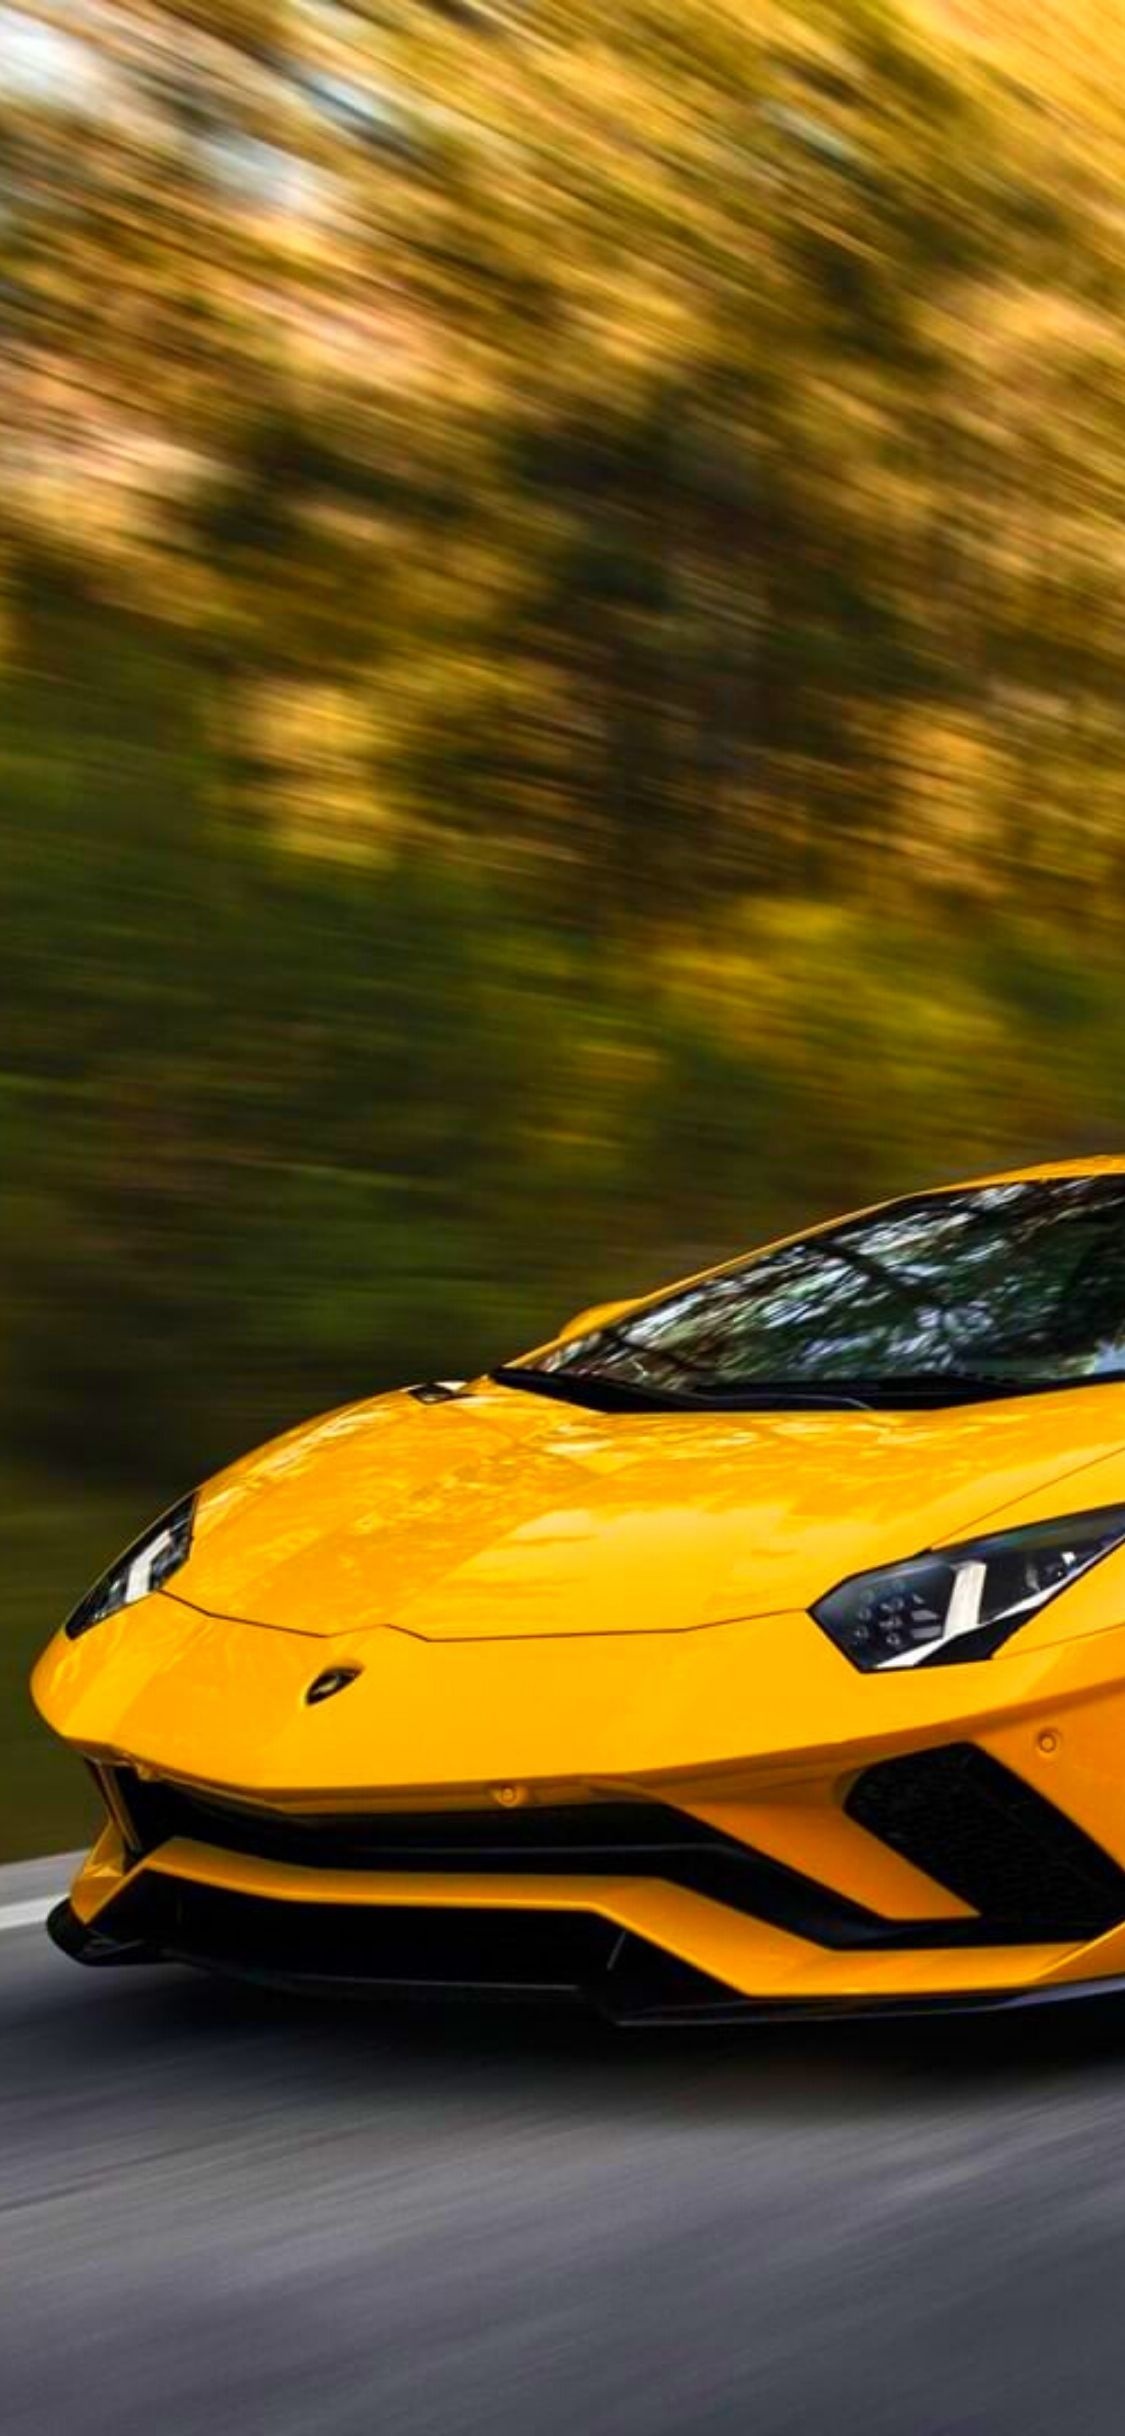 iPhone 11, Aventador wallpapers, Free download, Stunning Lamborghini visuals, 1130x2440 HD Handy